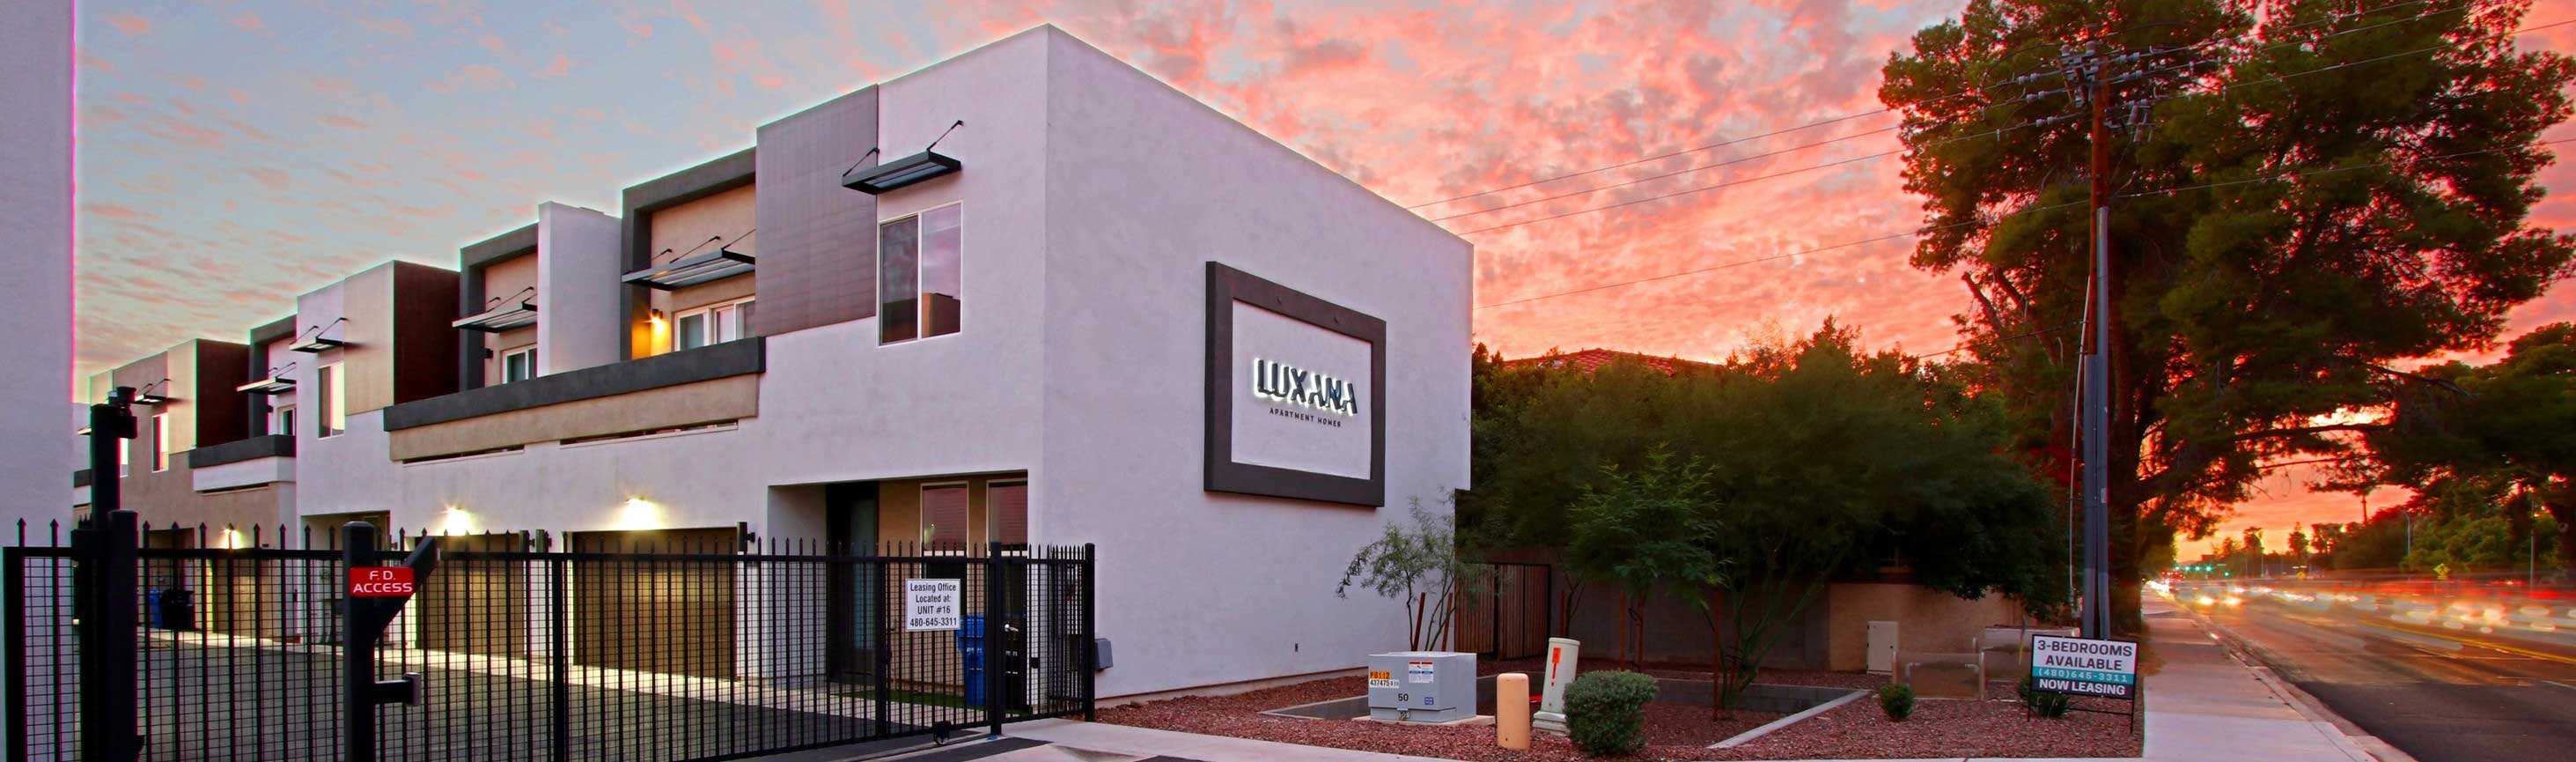 Luxana Apartments for Rent in Phoenix, AZ